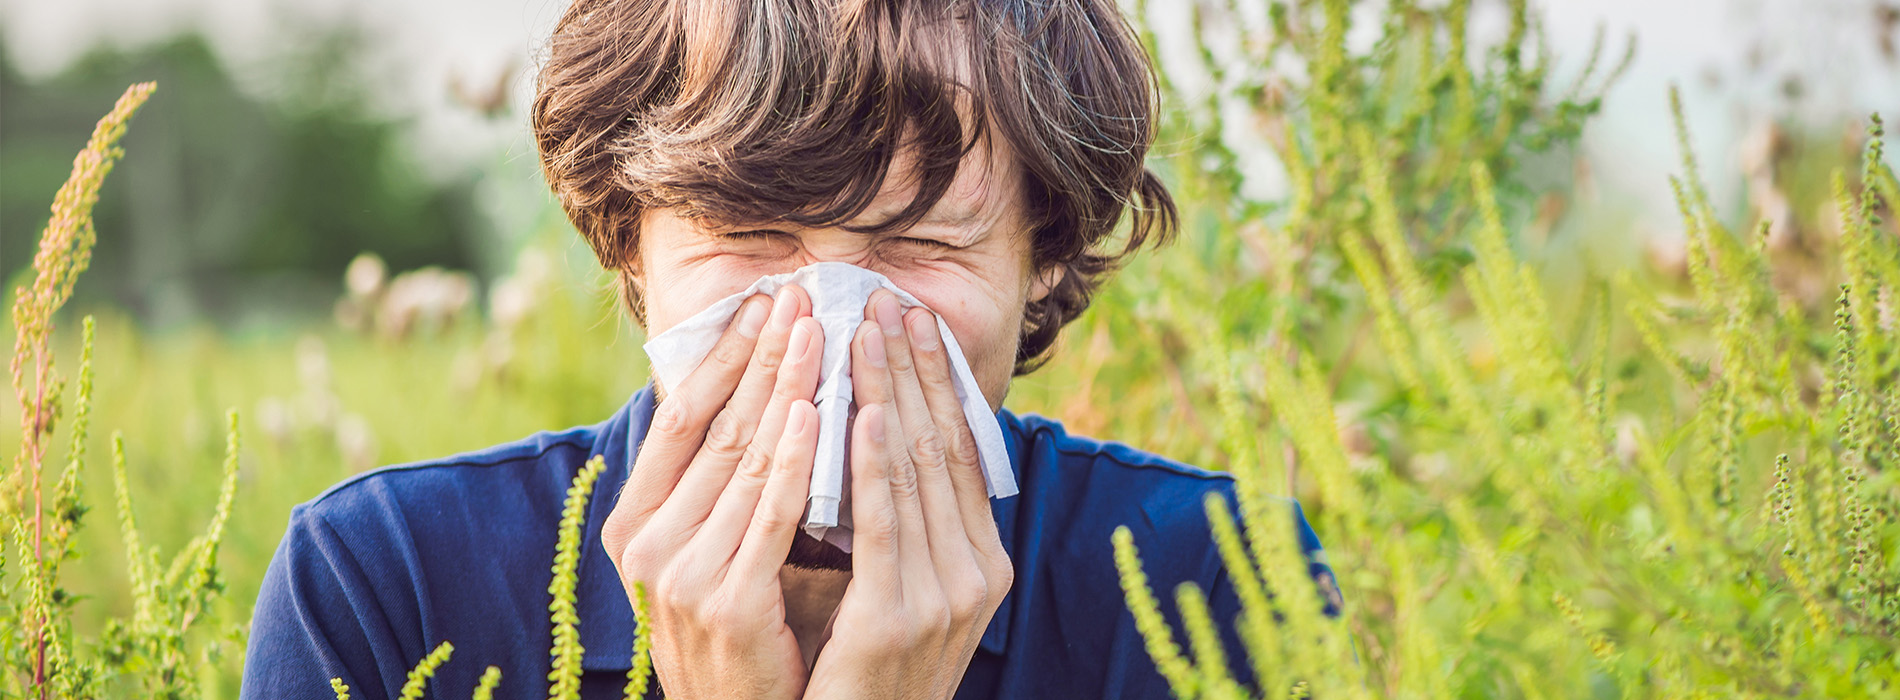 Advanced Allergy   Asthma Centers | Pediatric Allergy   Asthma, Food Allergies and Allergy Drops vs. Allergy Shots